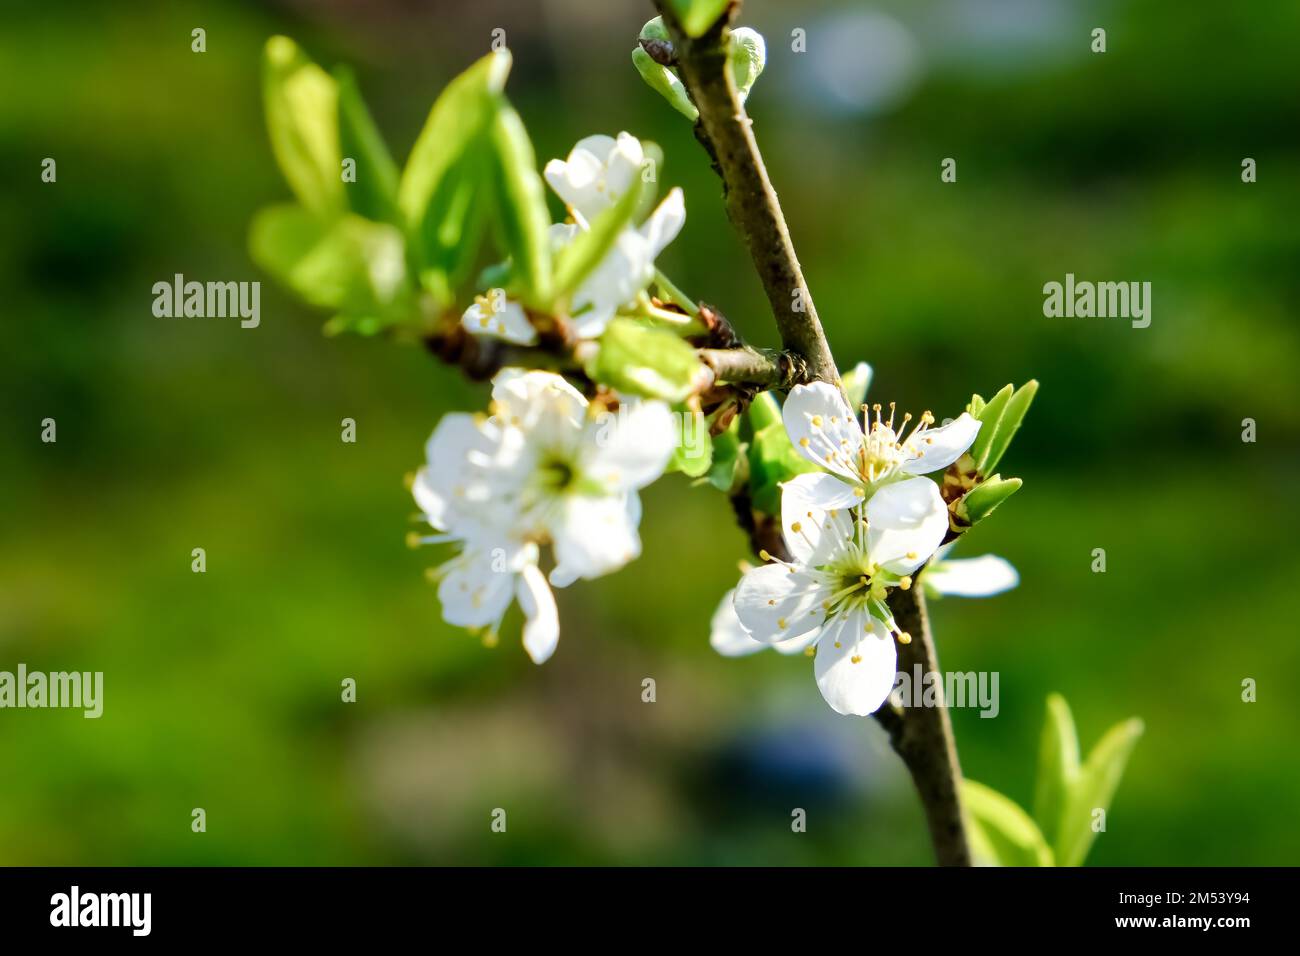 Blossom of Mirabelle plum in detail. Mirabelle plum (Prunus domestica subsp. syriaca) is a cultivar group of plum trees of the genus Prunus. Stock Photo